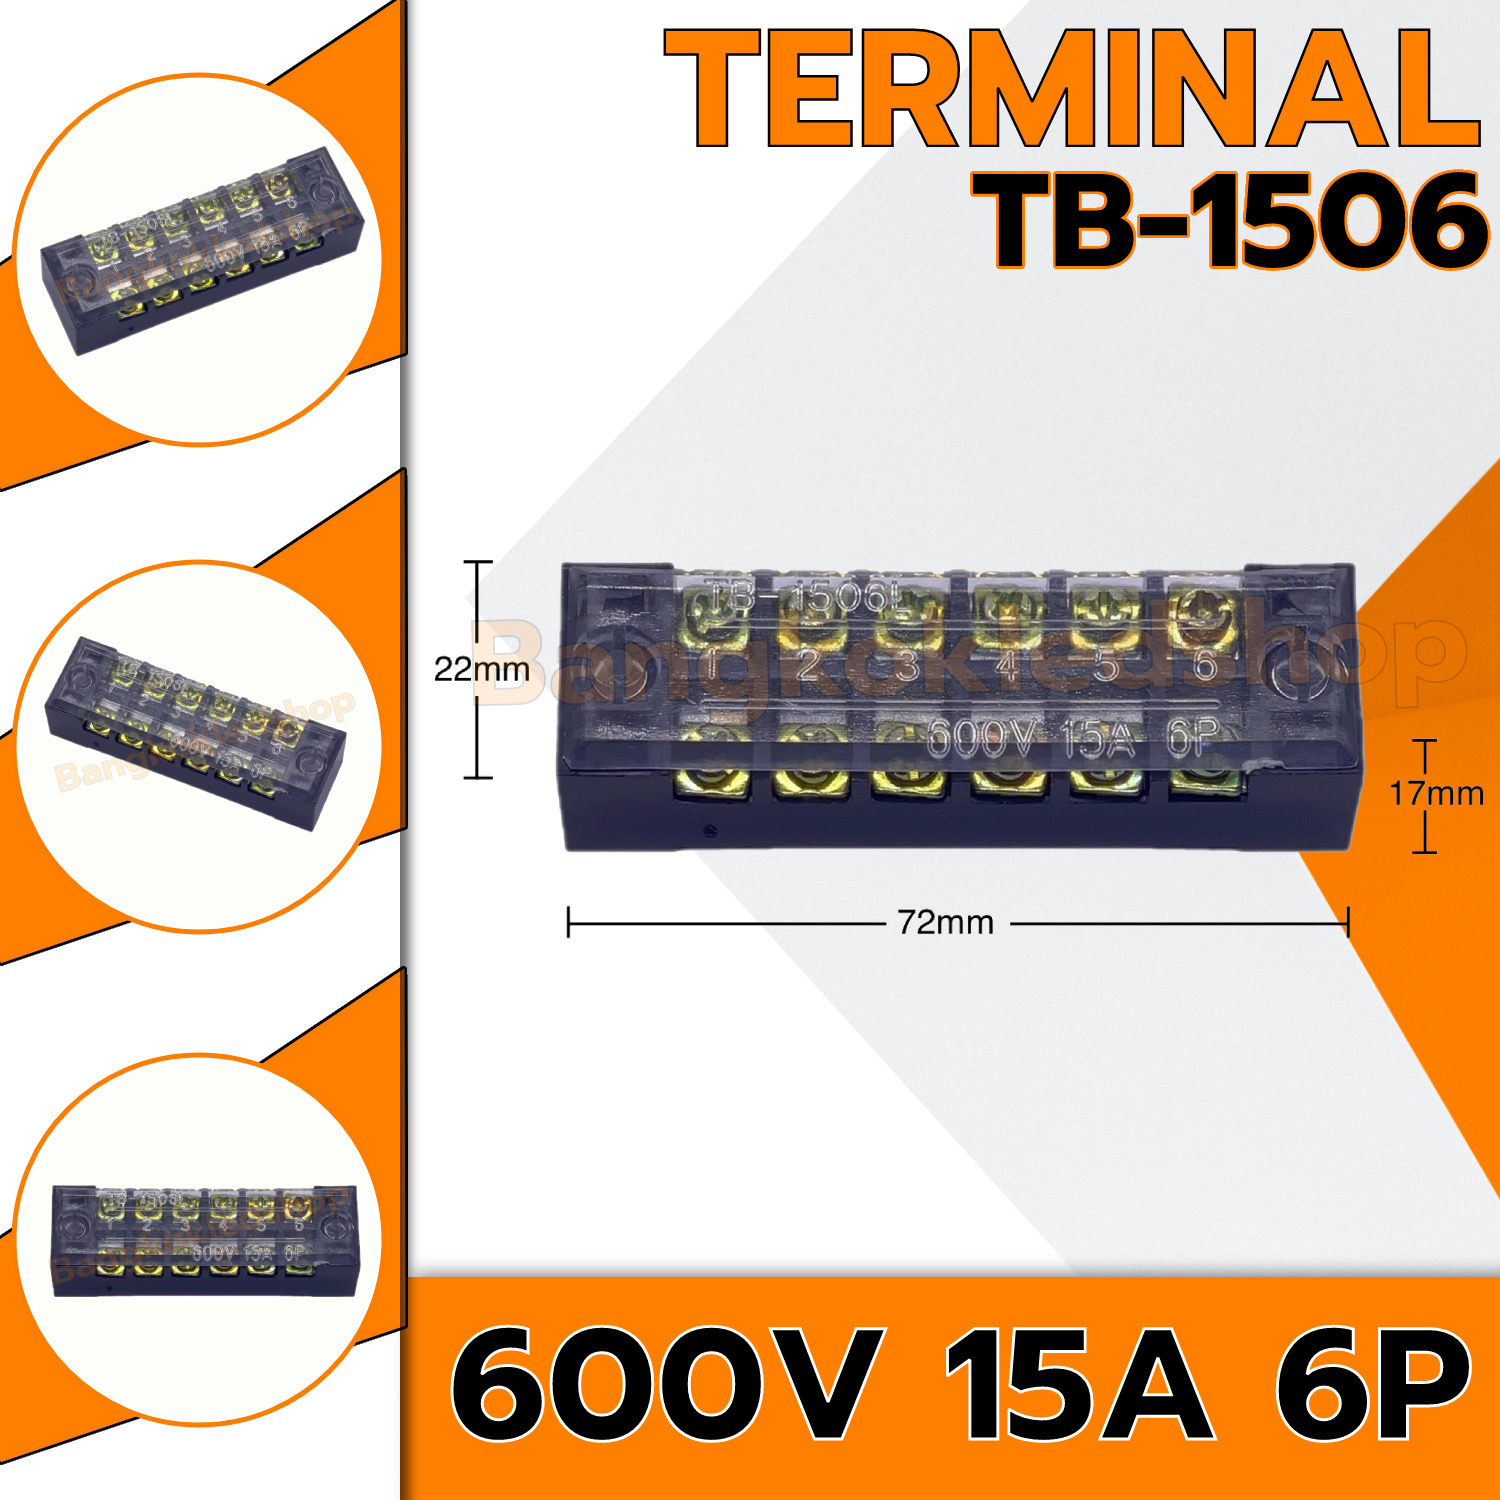 terminal-blocks-เทอร์มินอลบล็อก-ต่อสาย-15a-600v-รุ่น-tb-1503-tb-1512-ขนาด-3p-4p-5p-6p-8p-10p-12p